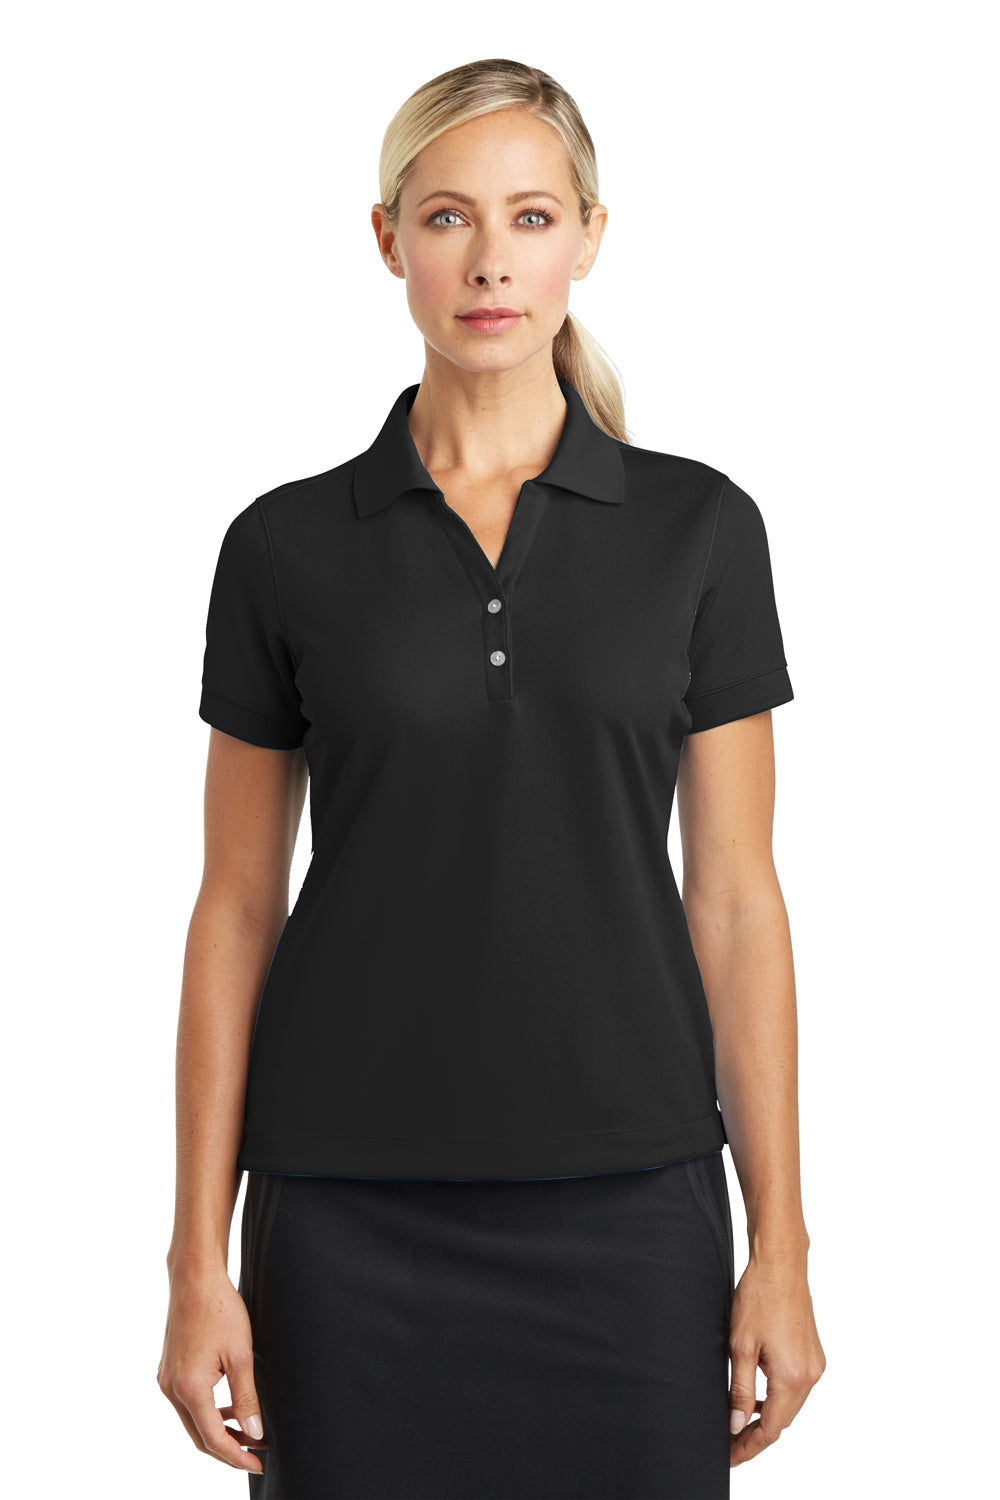 Nike 286772 Womens Classic Dri-Fit Moisture Wicking Short Sleeve Polo Shirt Black Model Front